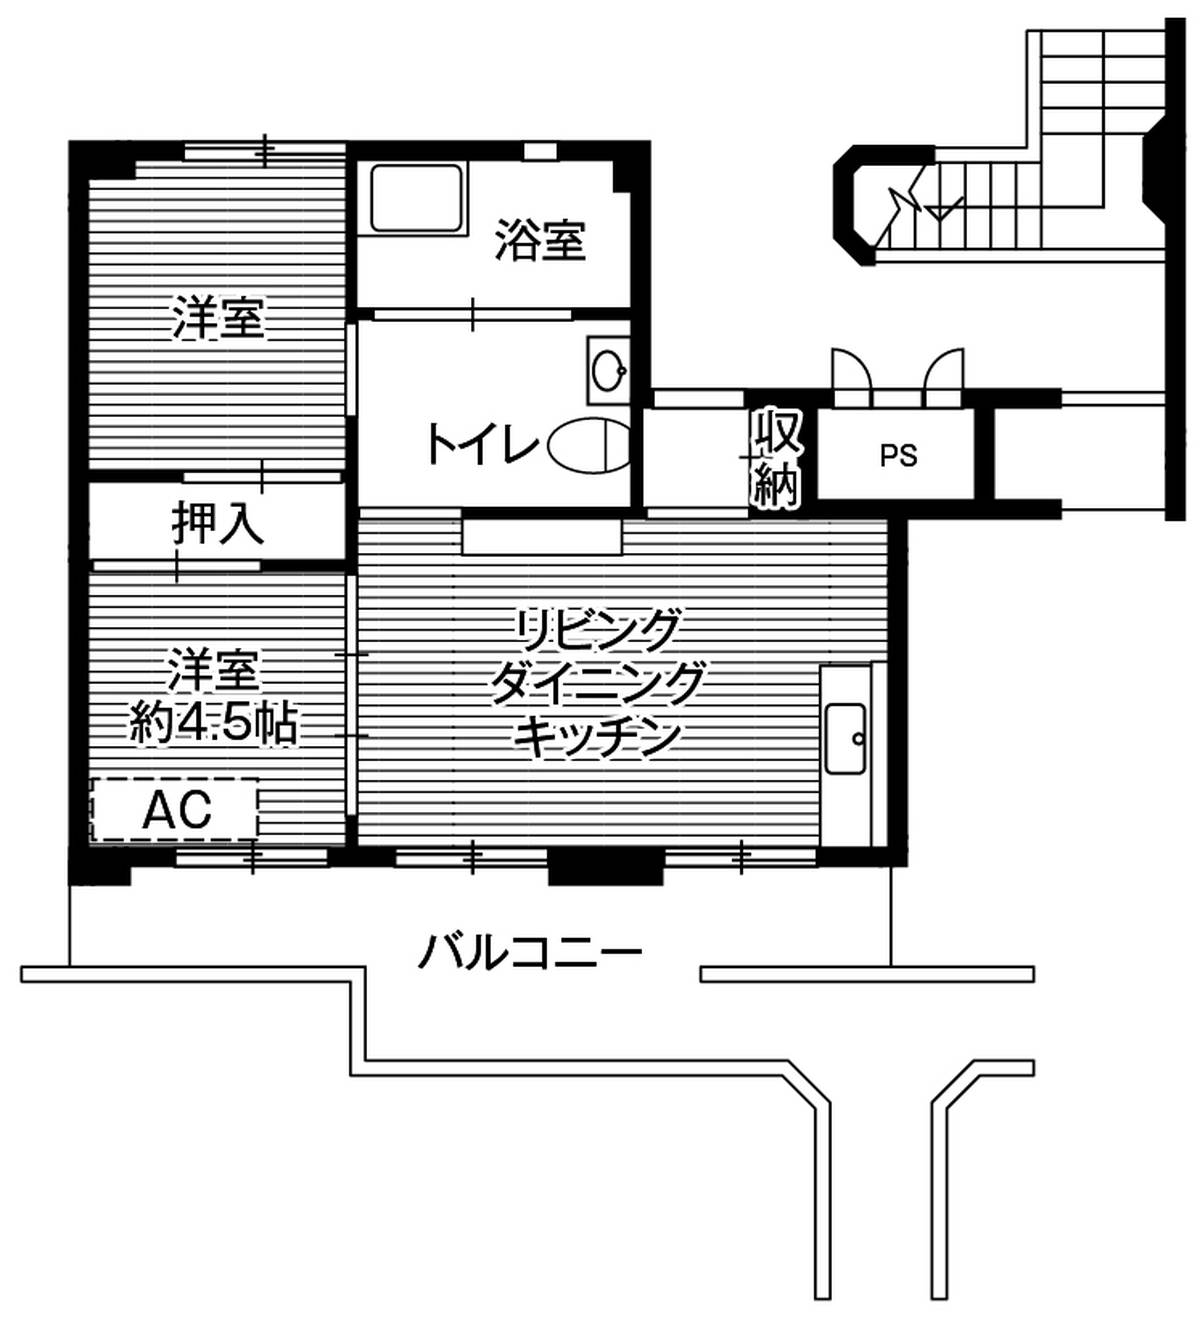 2LDK floorplan of Village House Ueda in Iwaki-shi